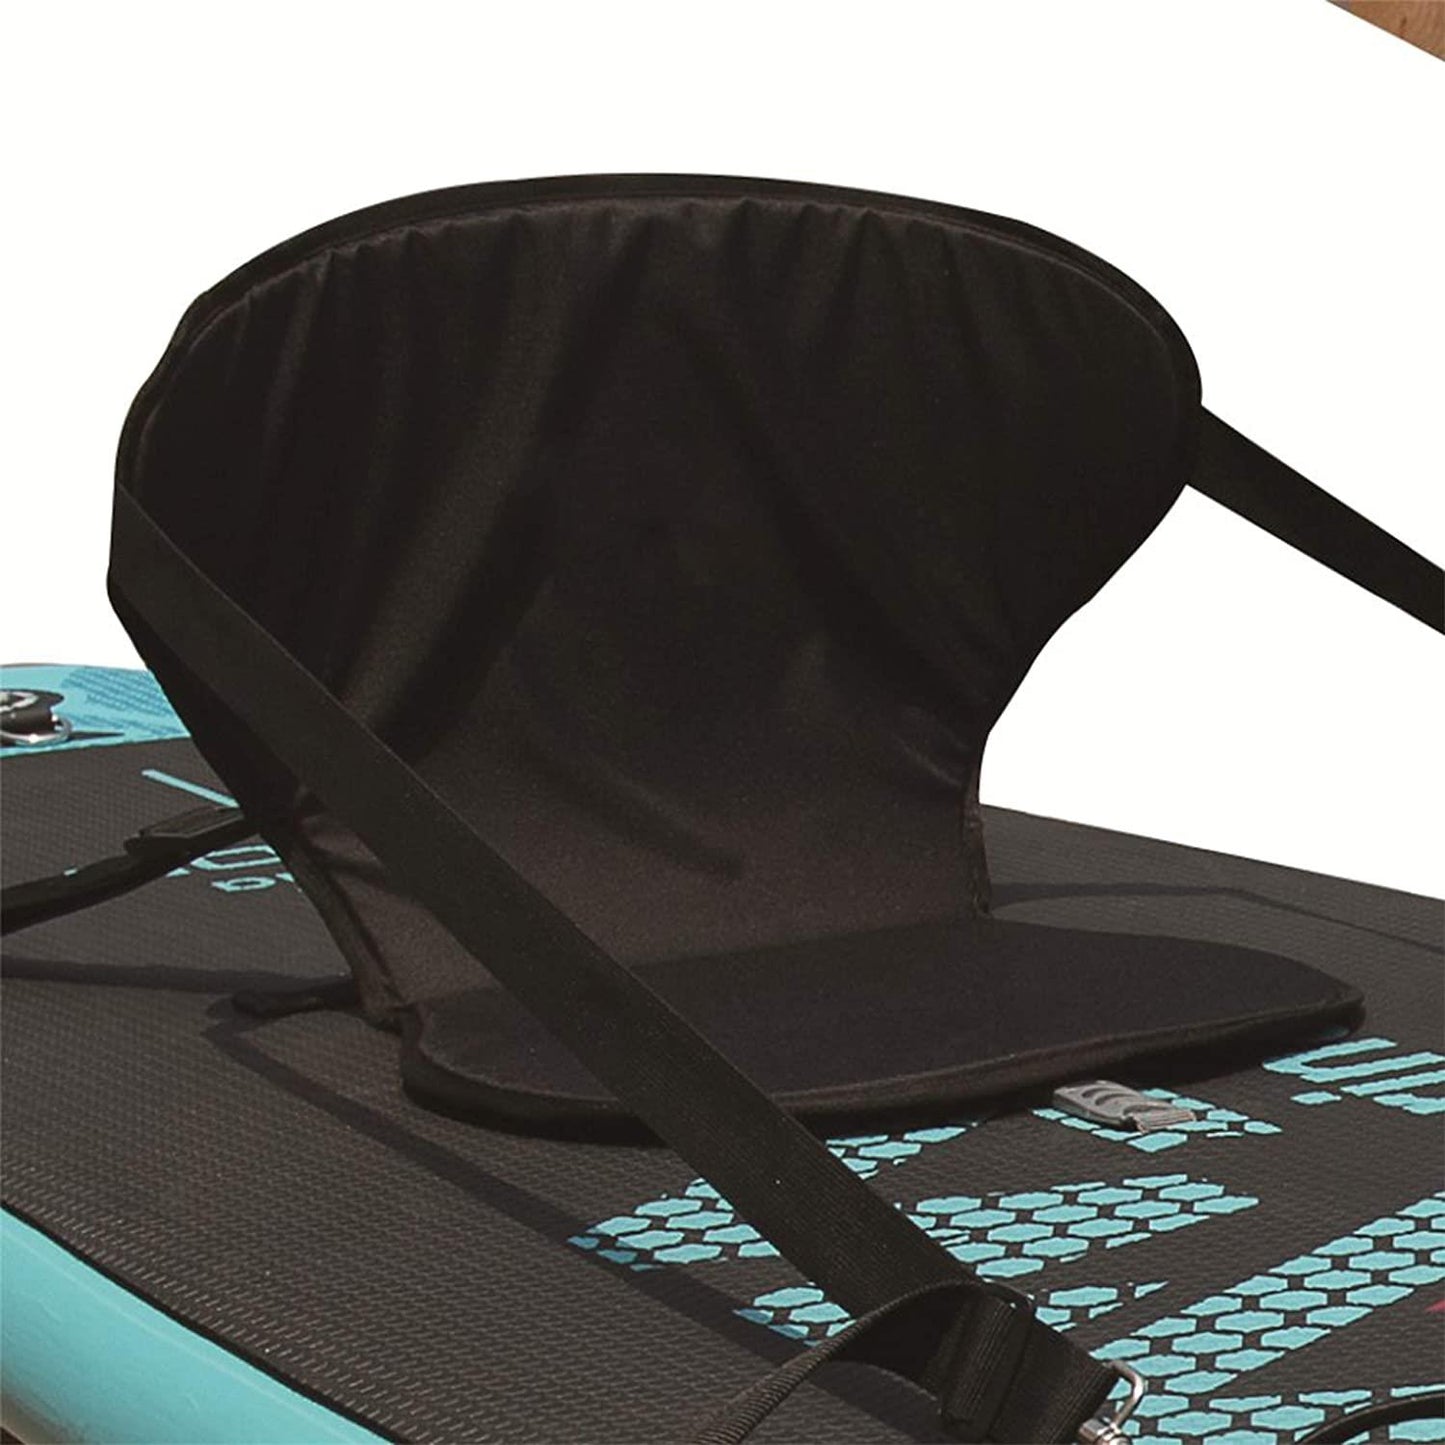 Paddleboard / Kayak / SUP Seat High Backrest by GEEZY - UKBuyZone